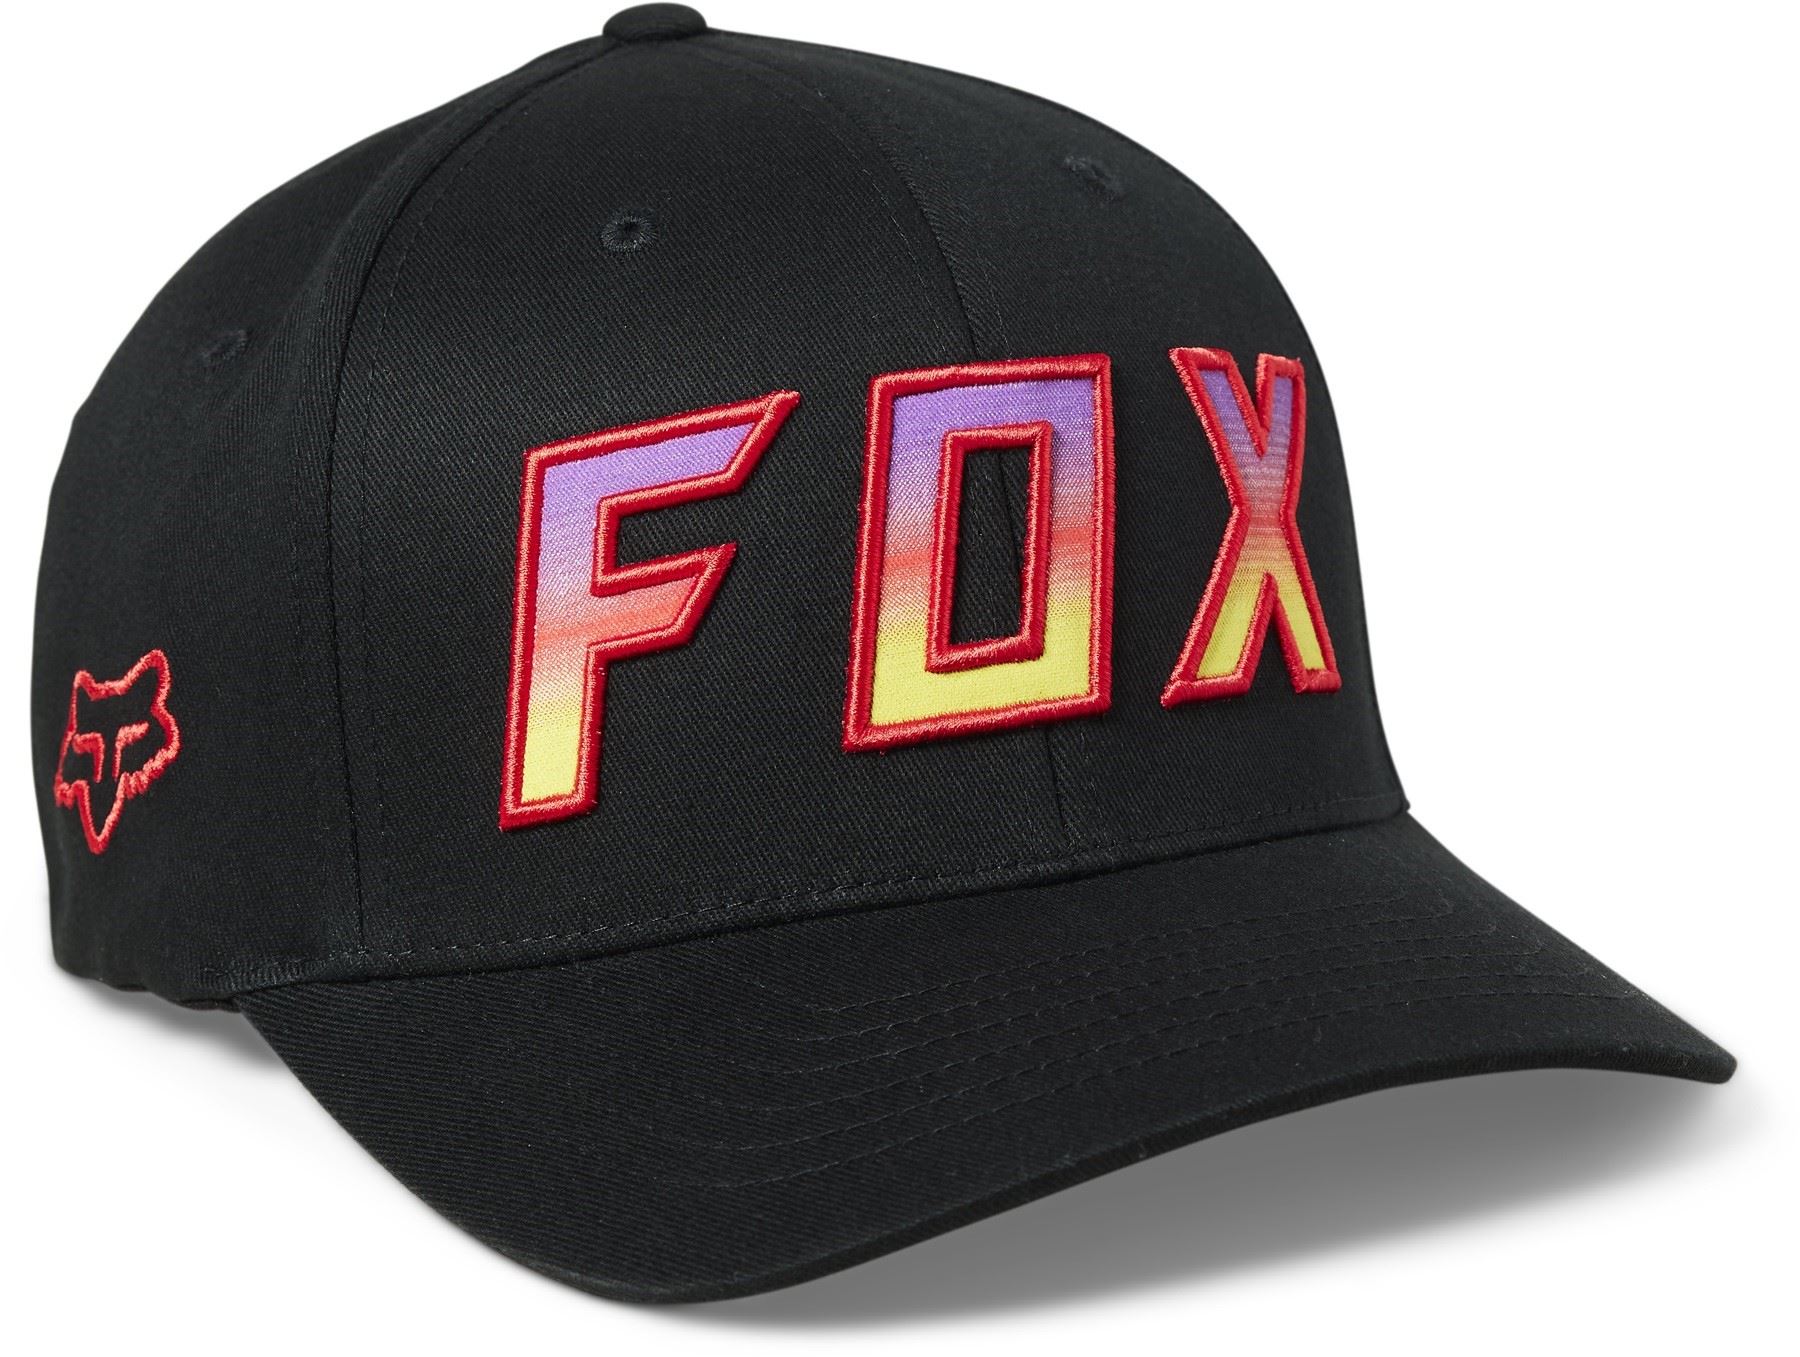 FGMNT Black Flexfit Hat Fox Racing